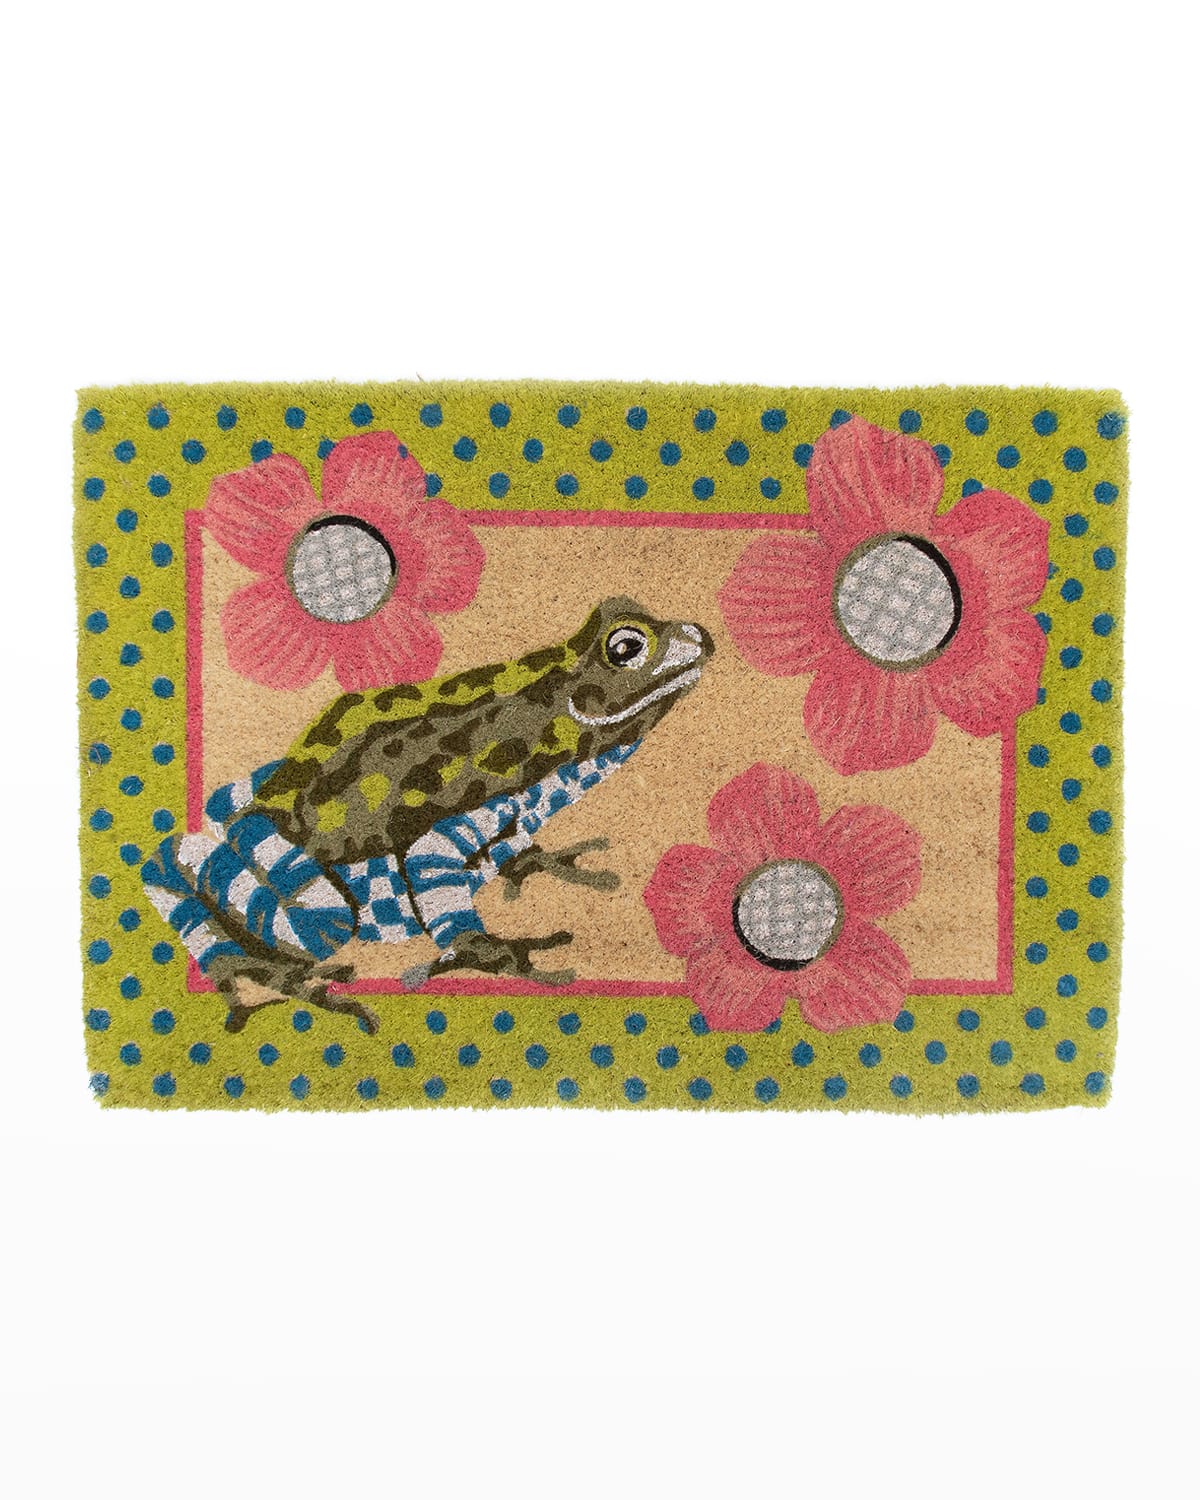 Frog & Flower Entrance Mat, 2' x 3'